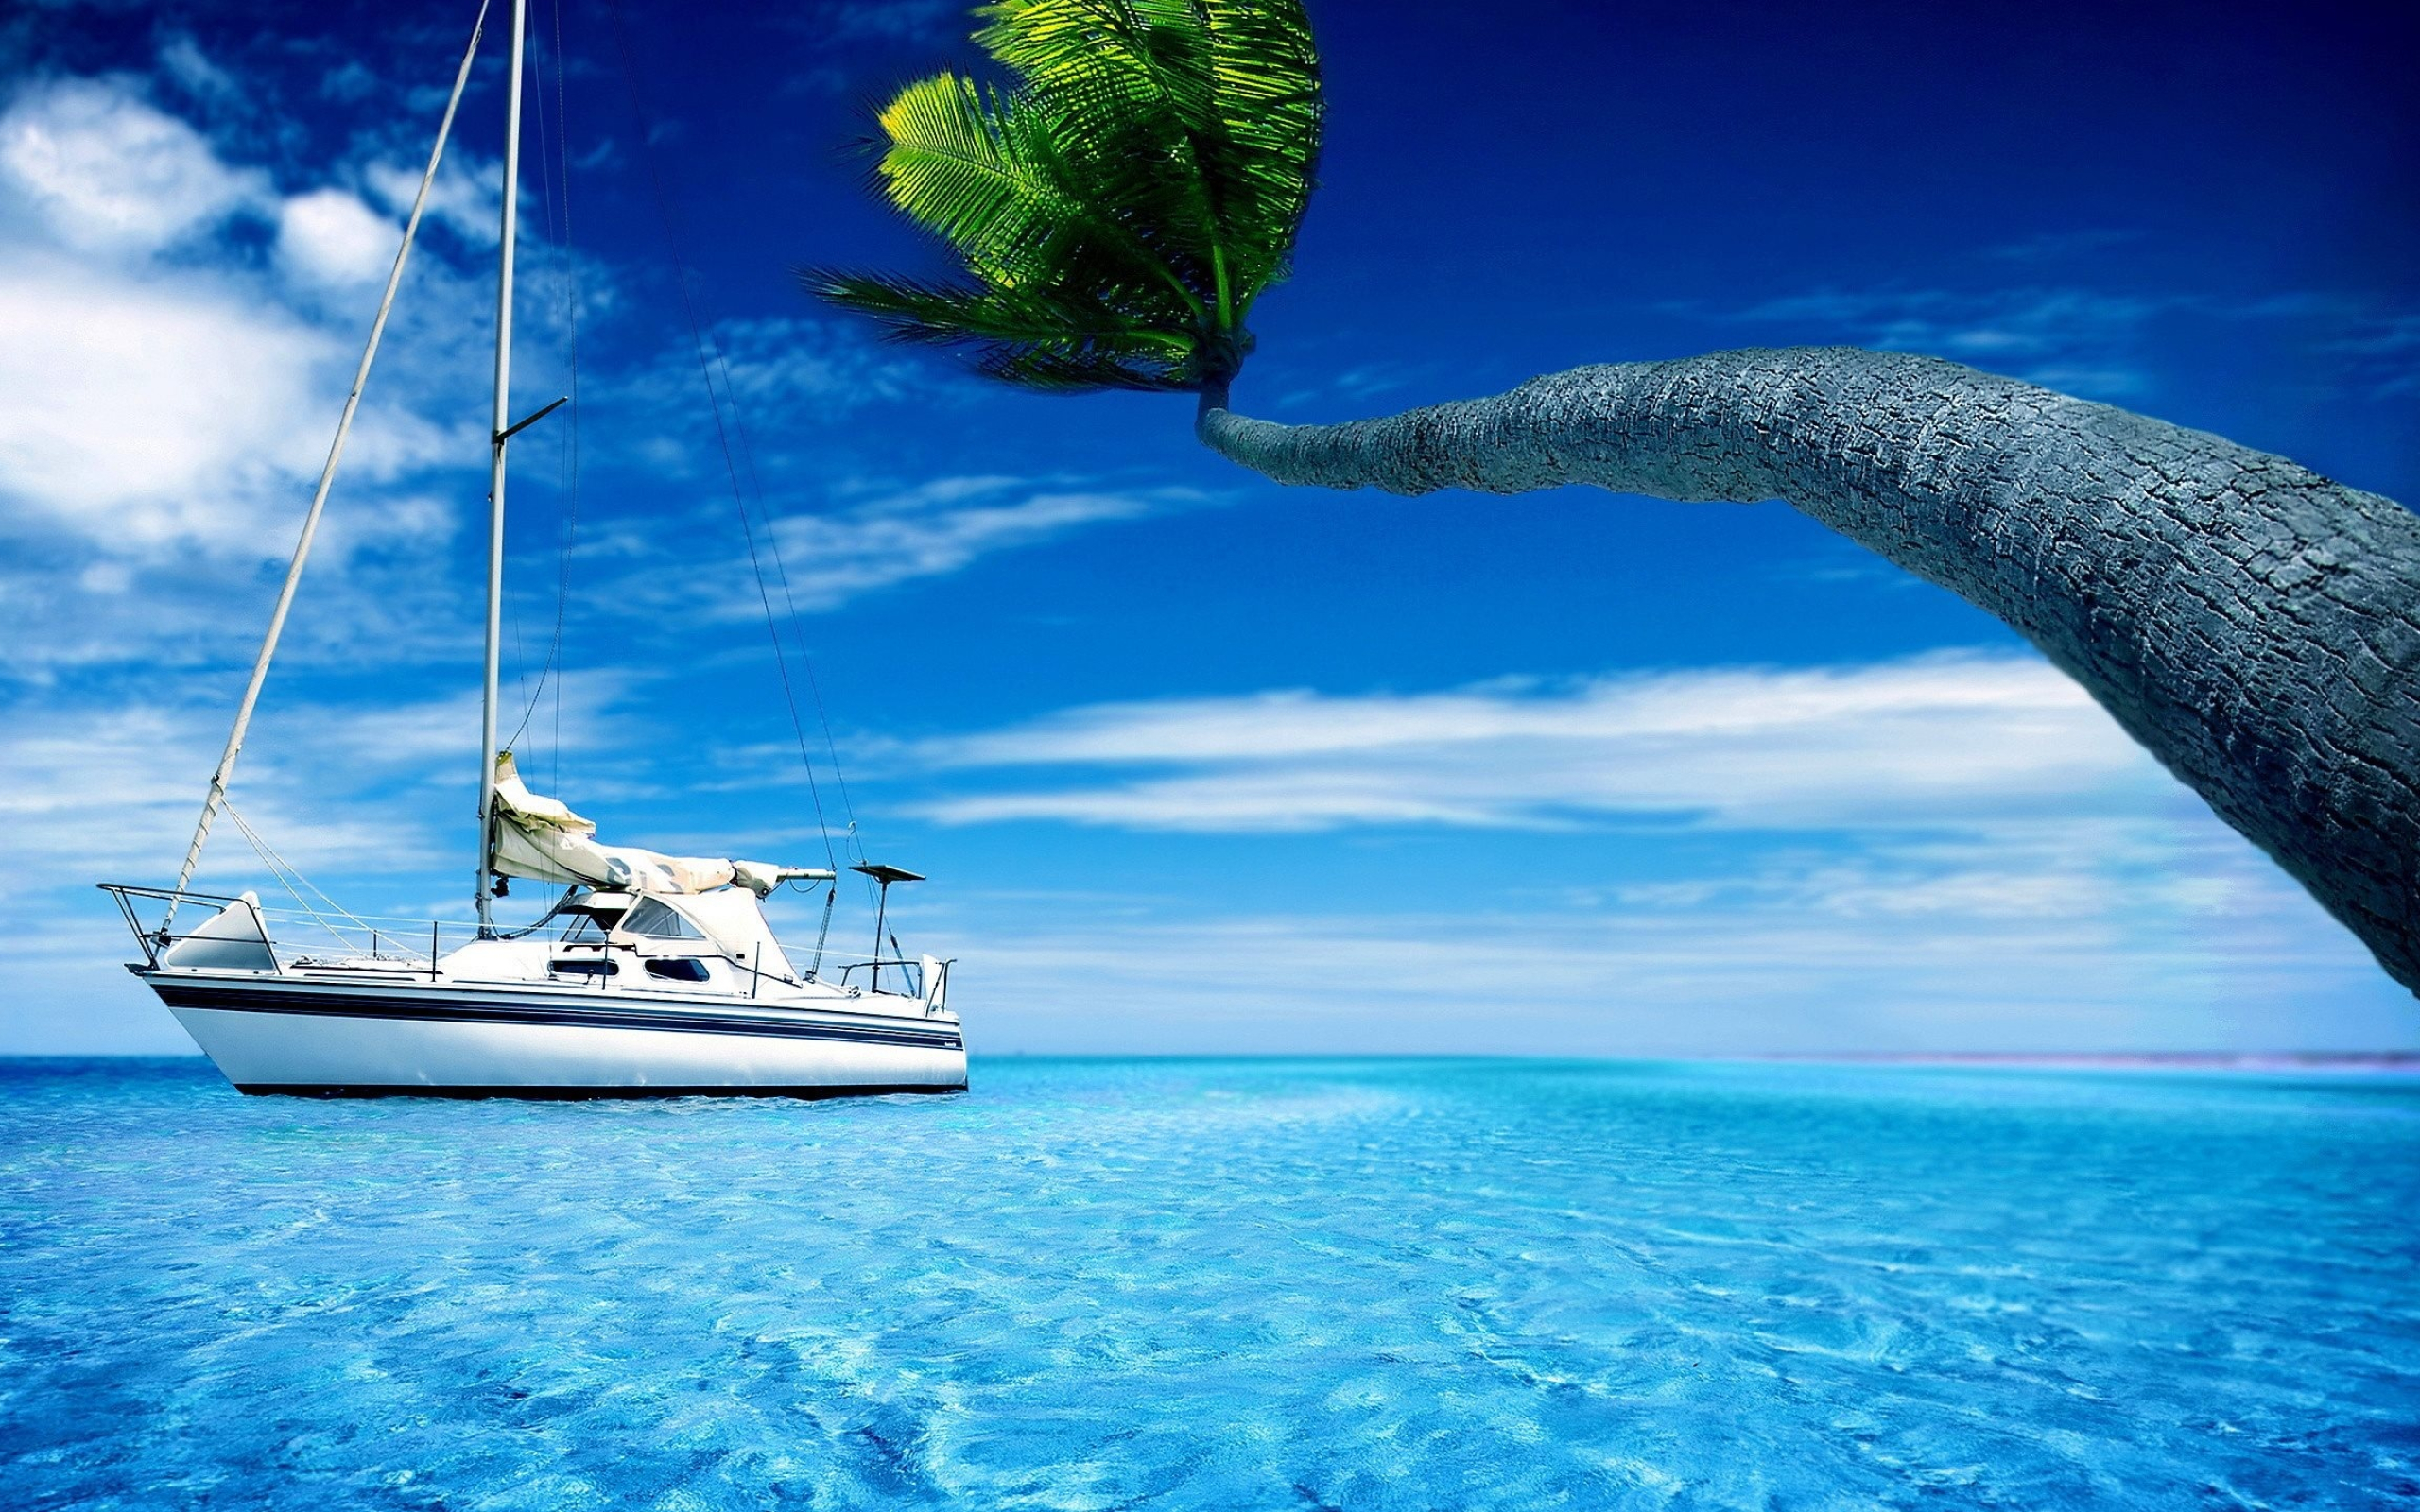 Sailing boat wallpaper, Nature-inspired, Landscape beauty, Serene setting, 2560x1600 HD Desktop